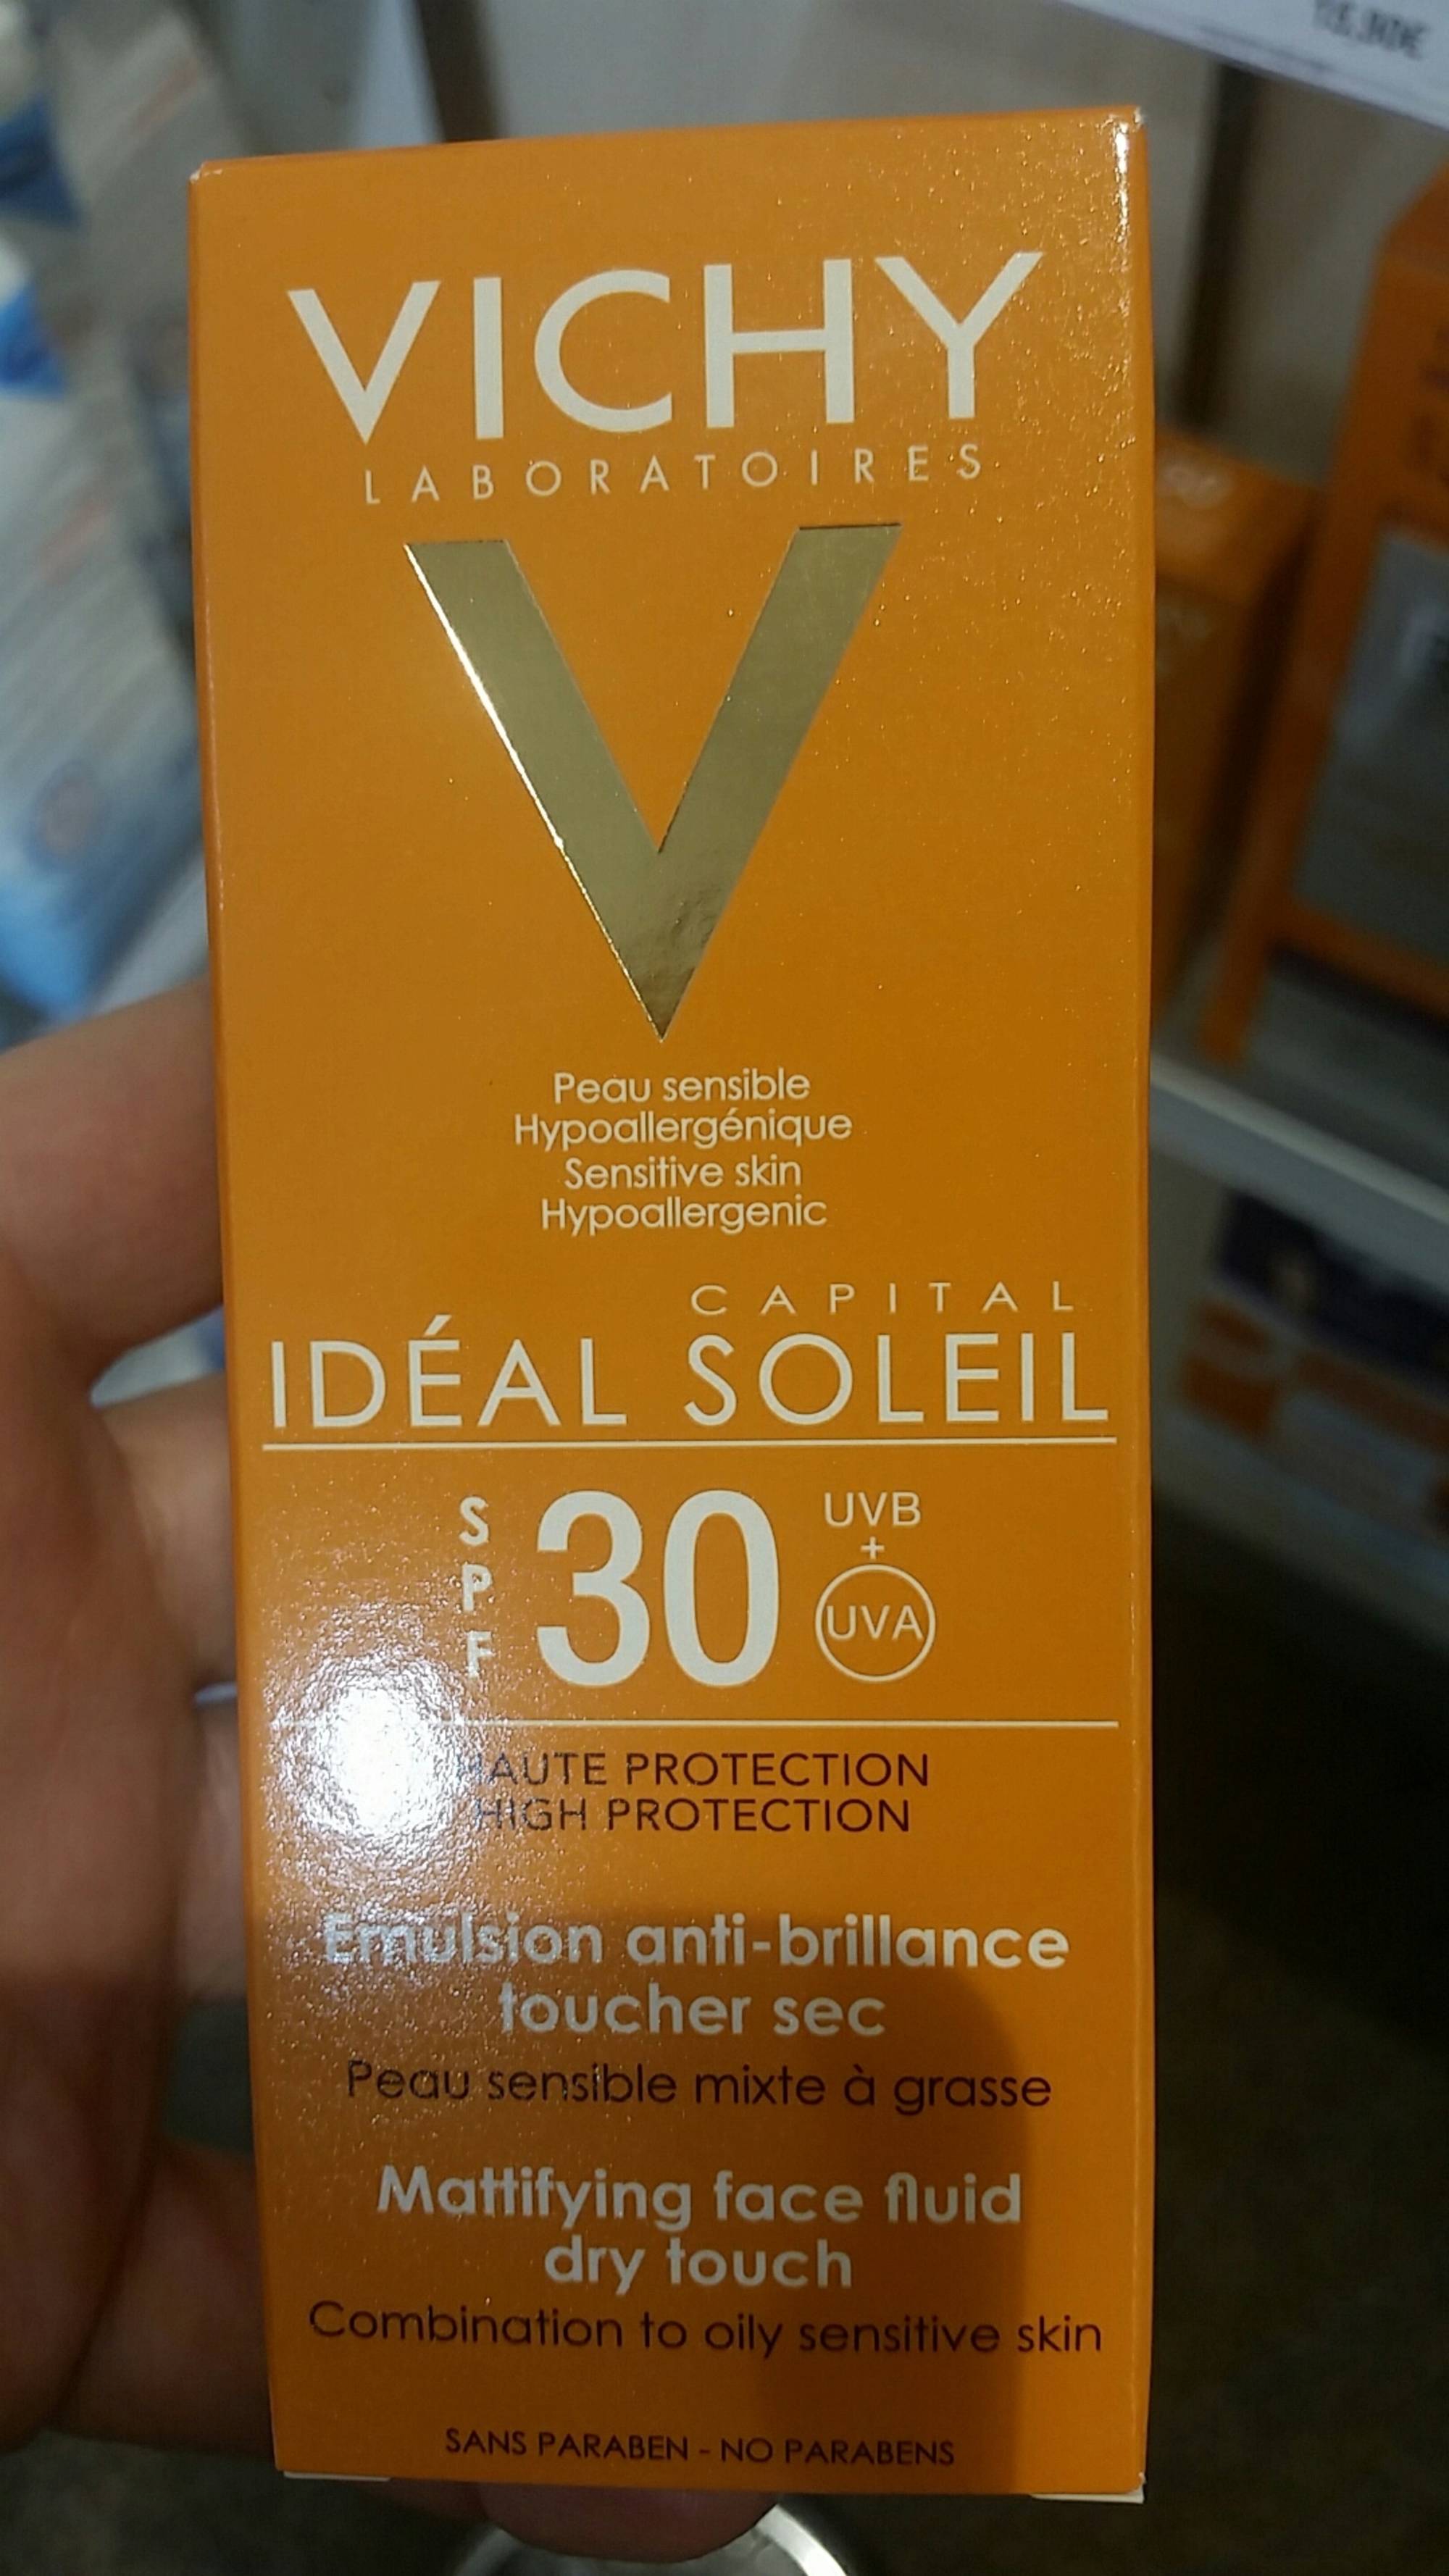 VICHY - Idéal soleil - Emulsion anti-brillance toucher sec SPF 30  